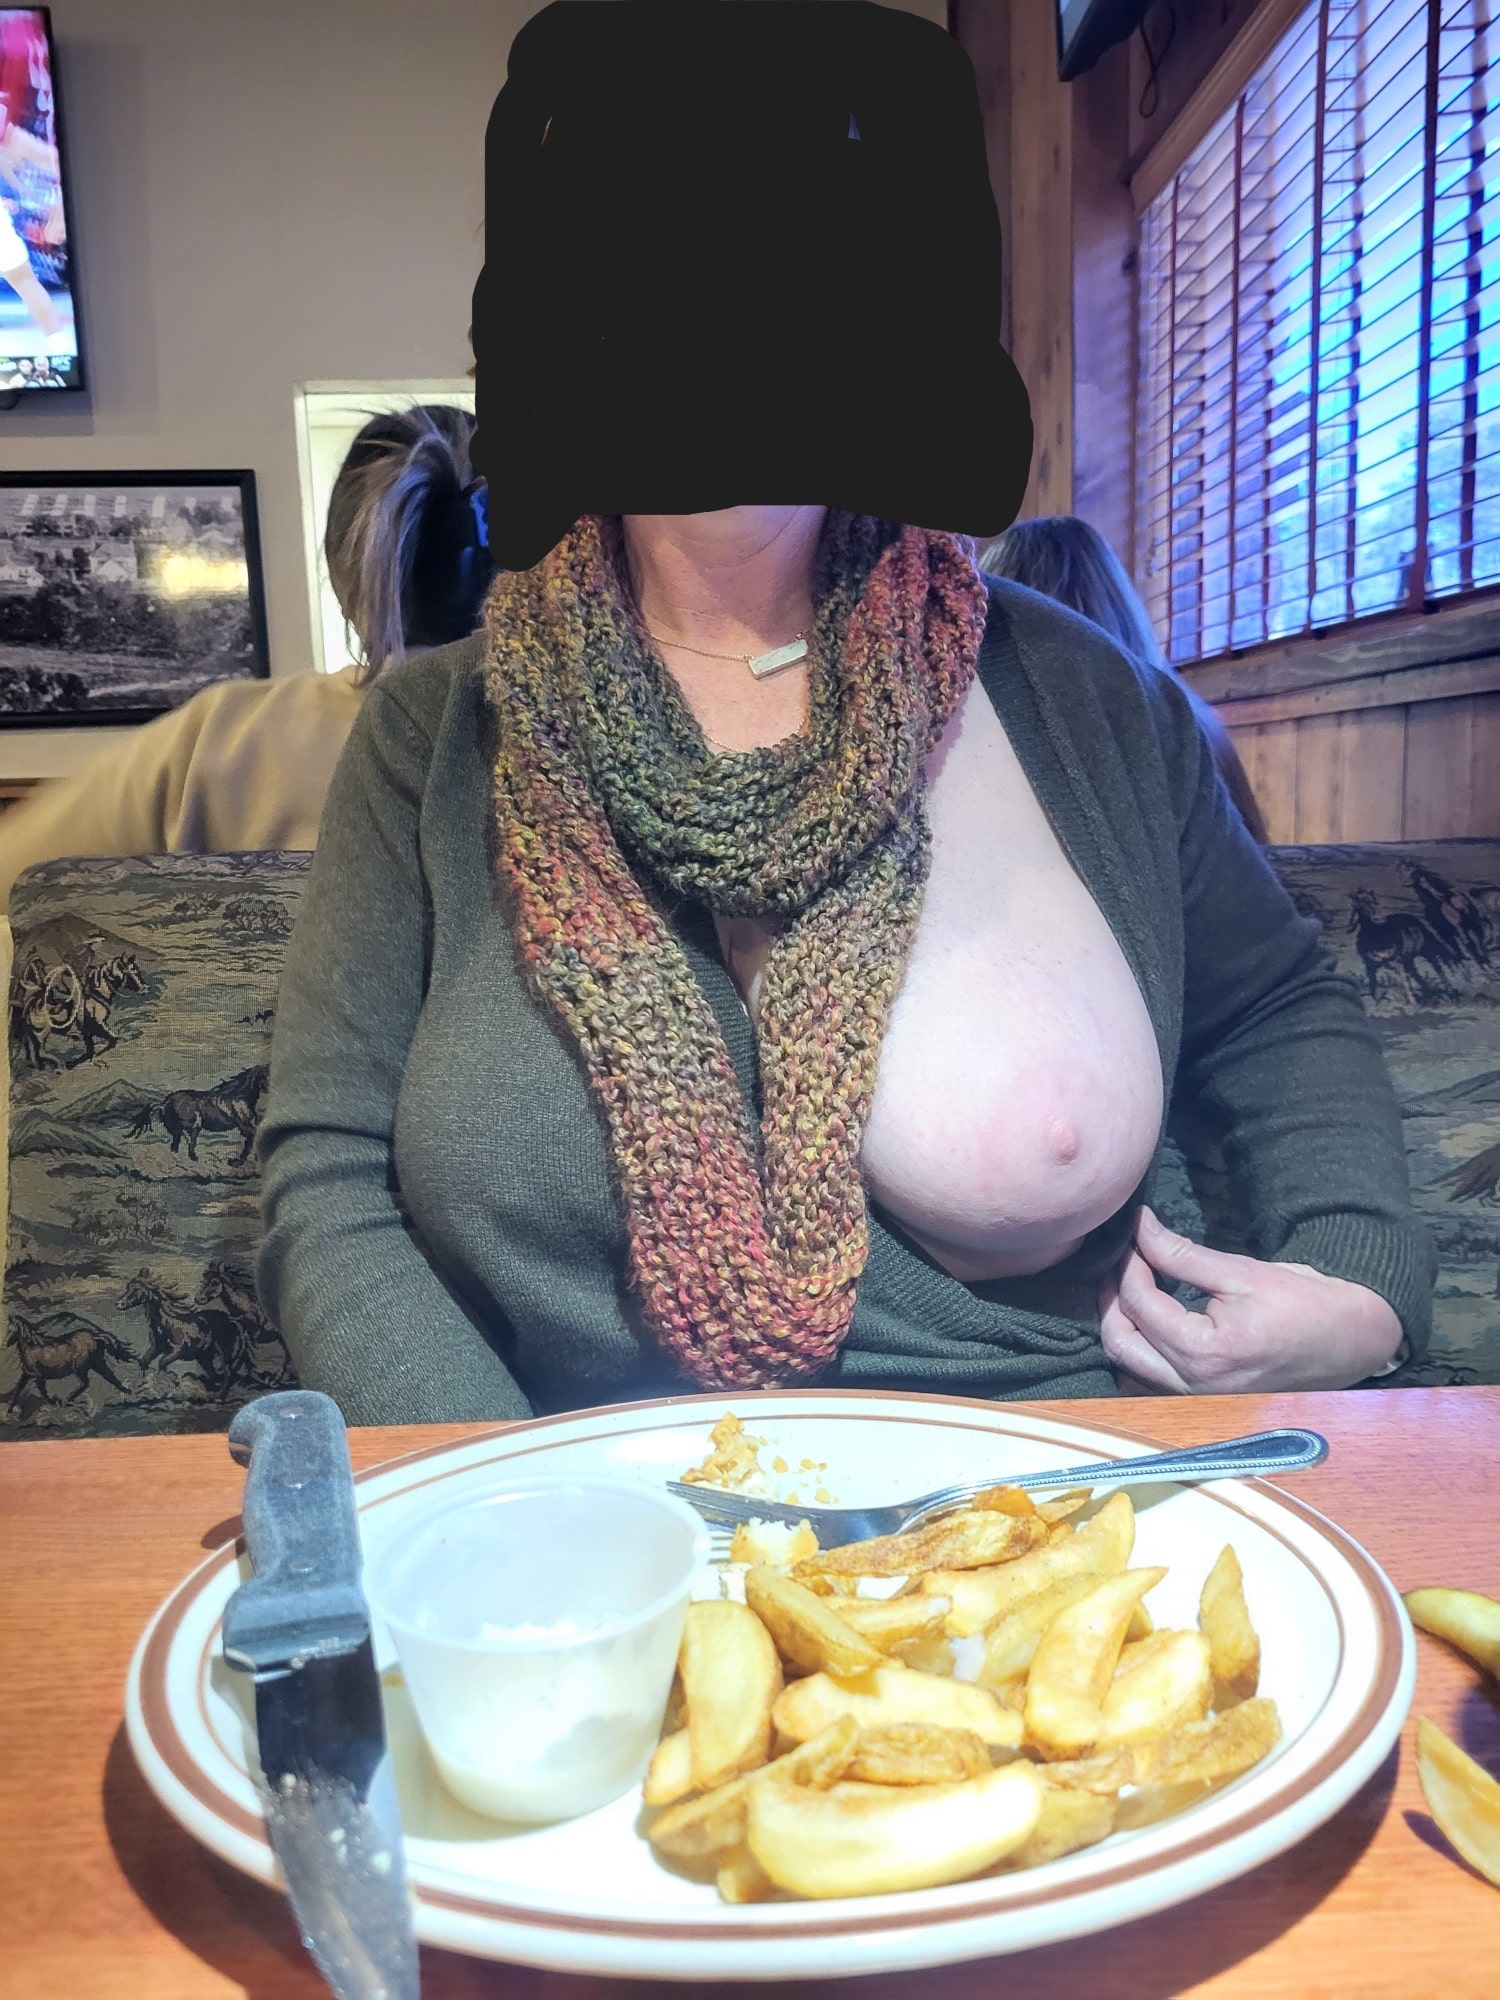 flashing massive boobs - Flashing massive boob in the restaurant - Boobs Flash Pics